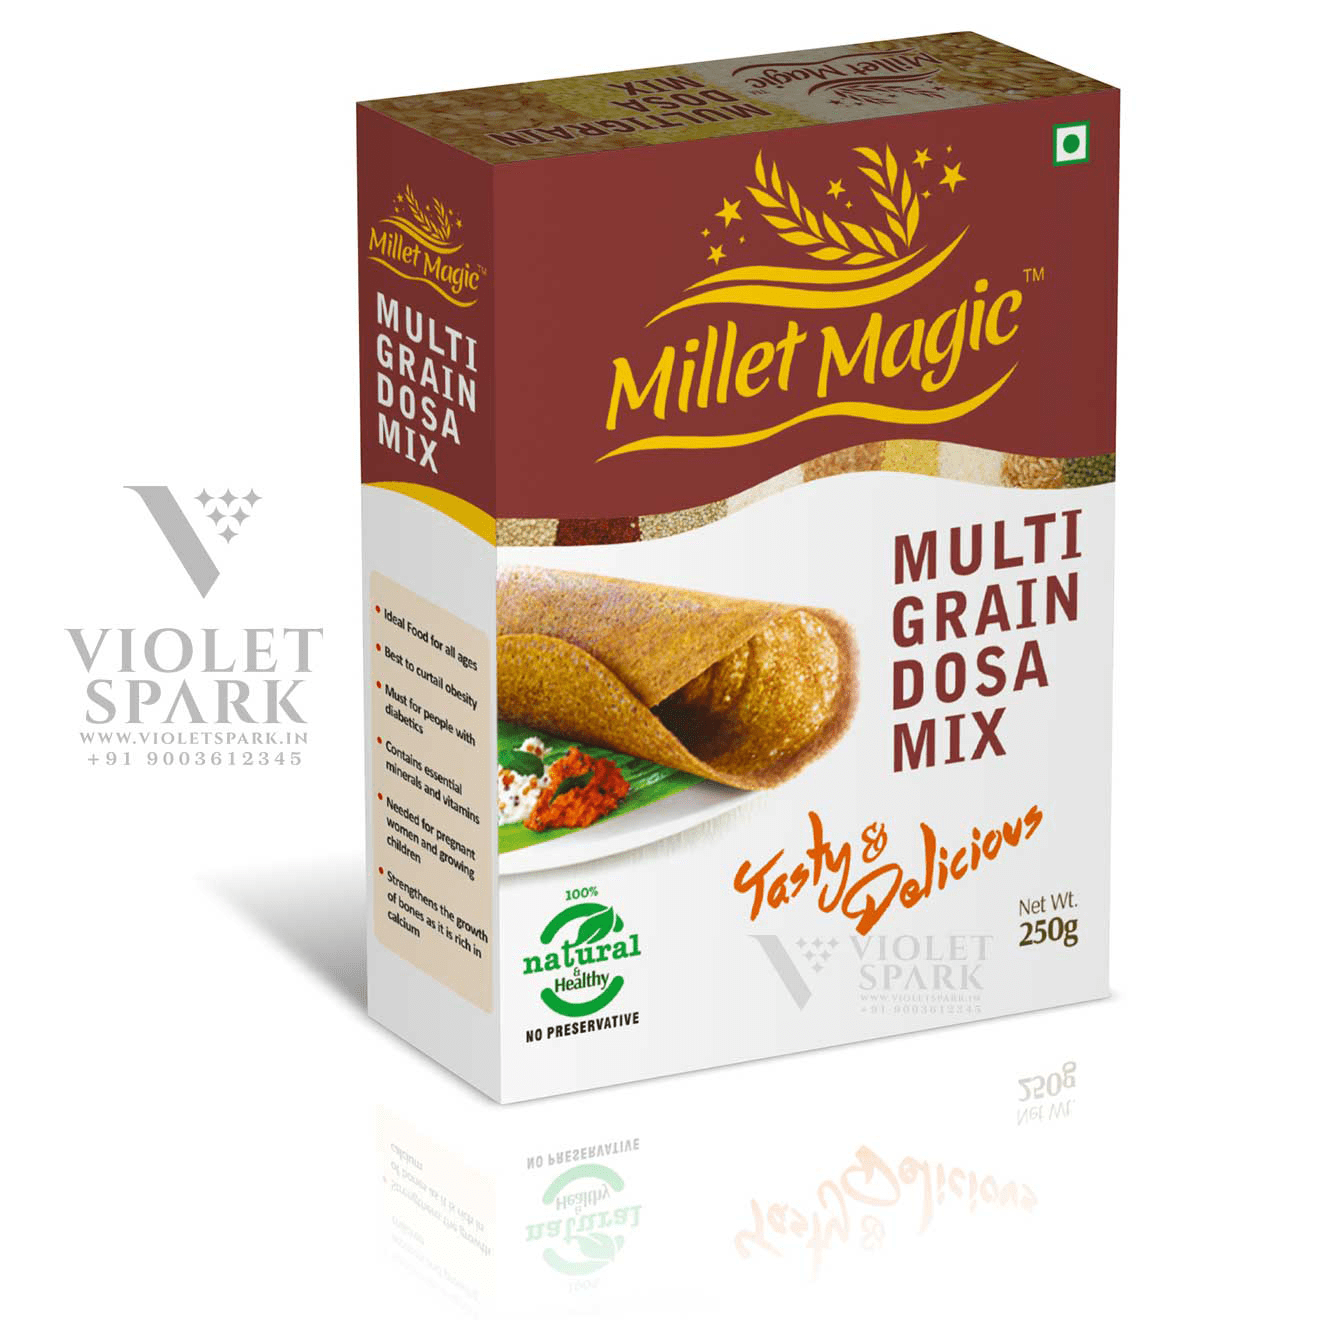 Millet Magic Multi Grain Dosa Mix Branding Packaging Design Digital Marketing in Mumbai by Violet Spark